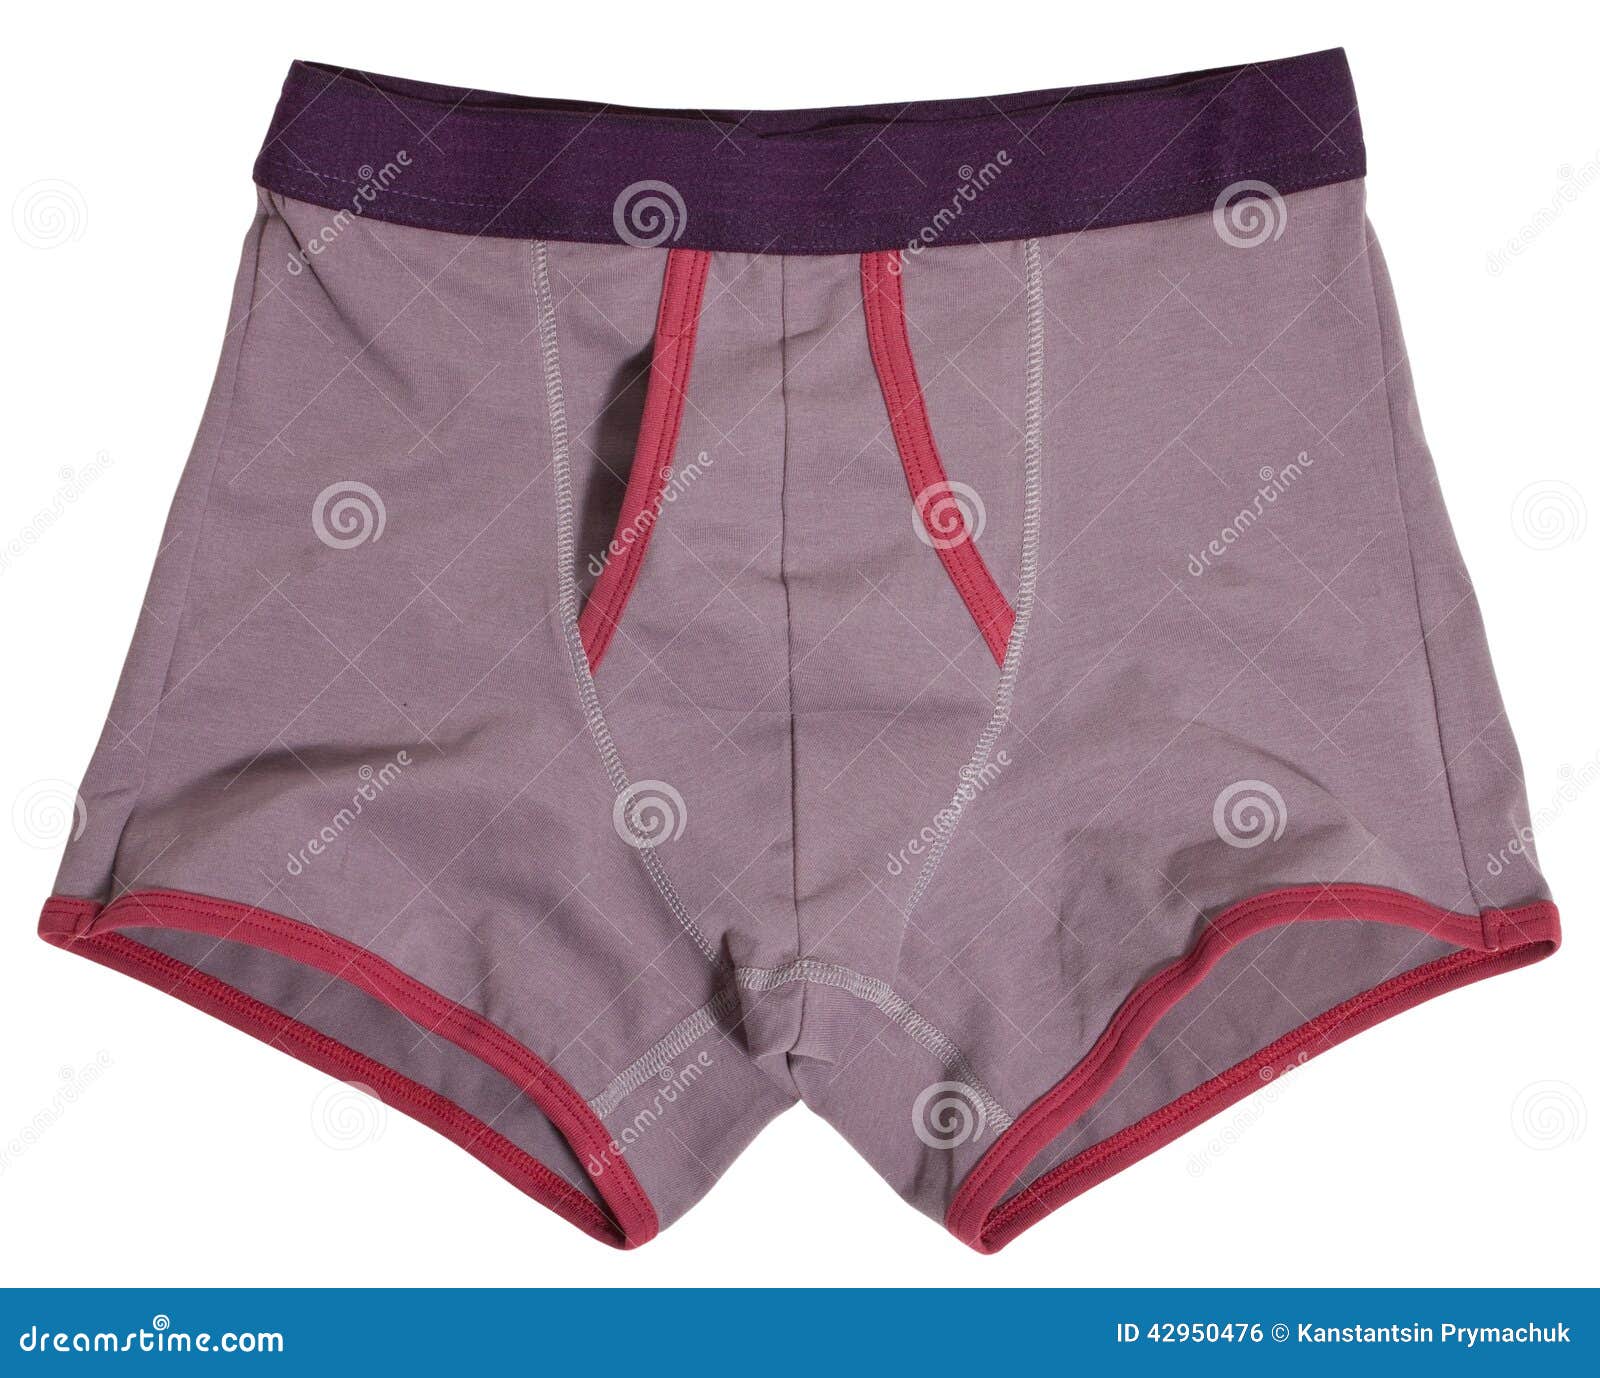 Male Underwear Isolated on White Background. Stock Photo - Image of ...